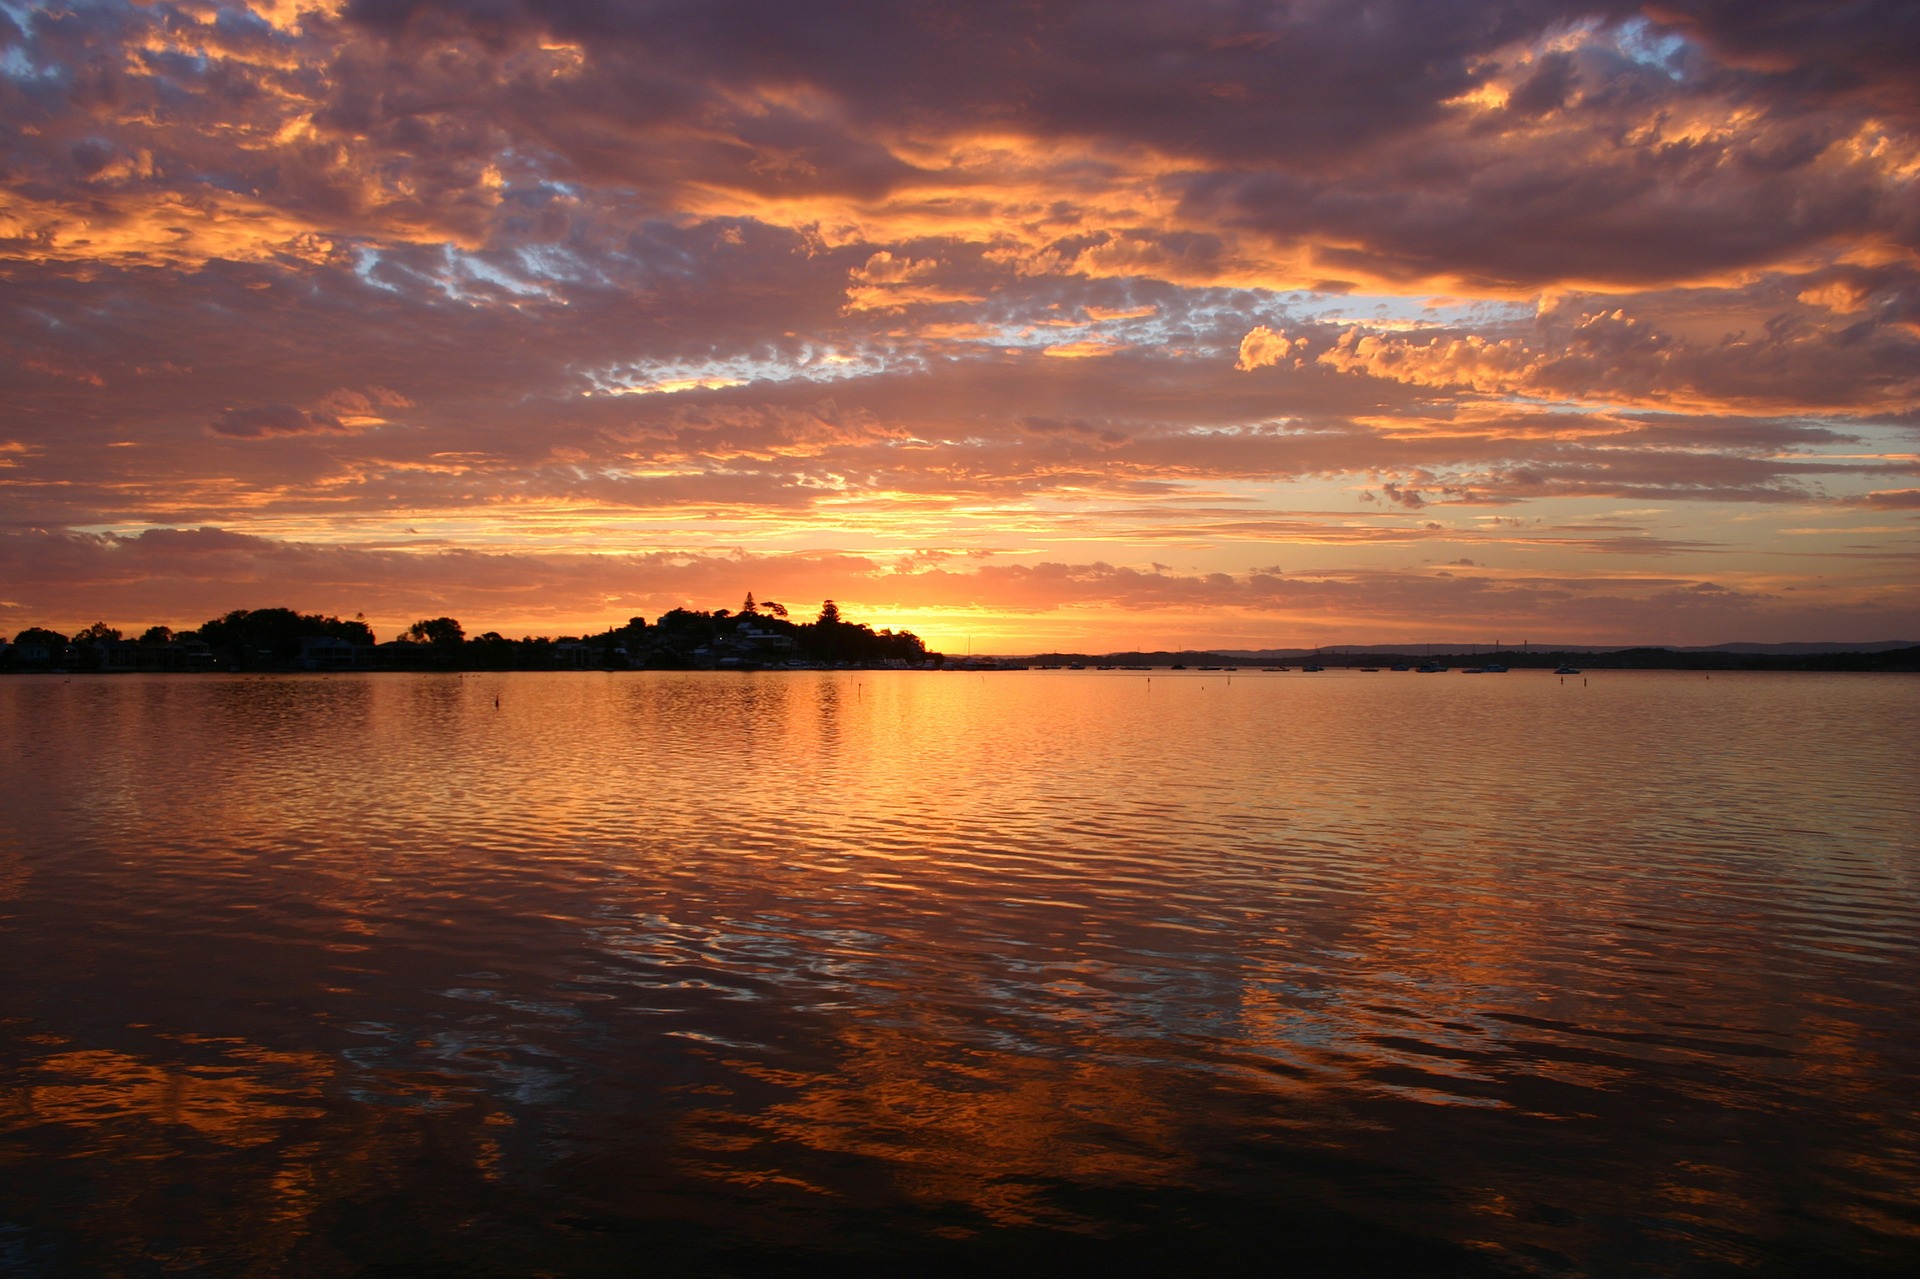 orange sun setting over the water in australia 